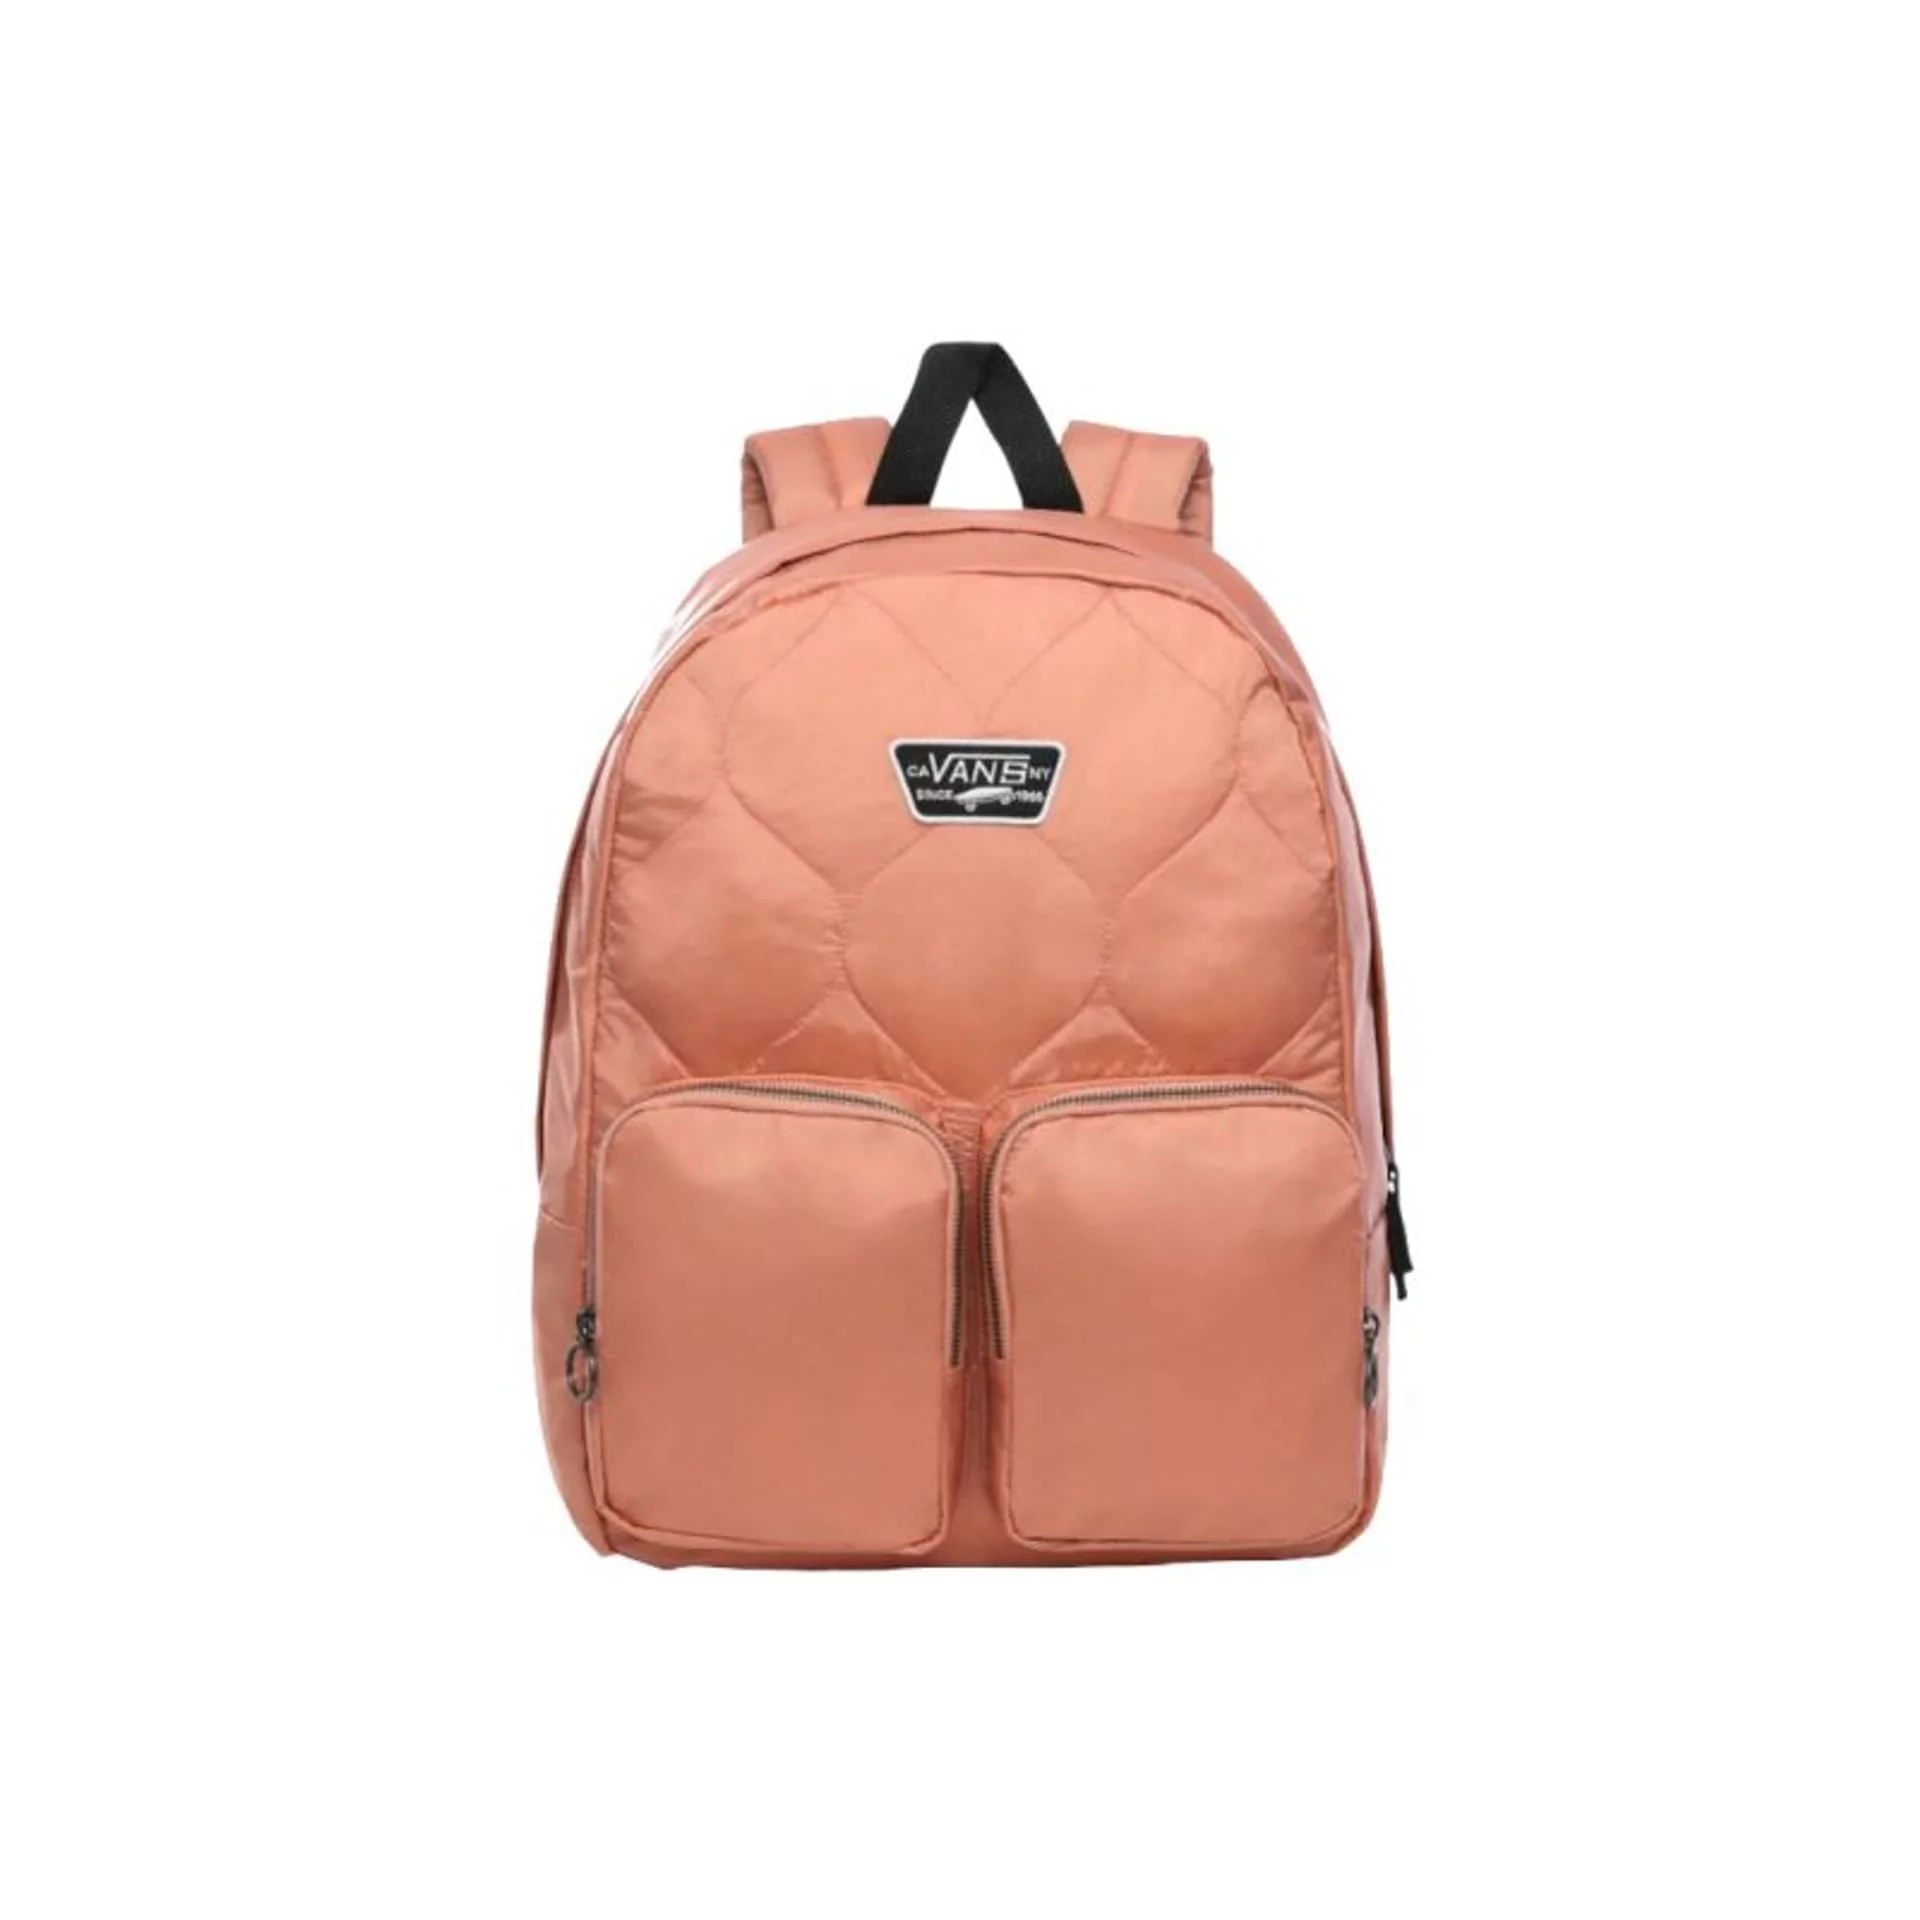 Plecak Vans Long Haul Backpack VN0A4S6XZLS (kolor Różowy, rozmiar One size)  - Ceny i opinie na Skapiec.pl